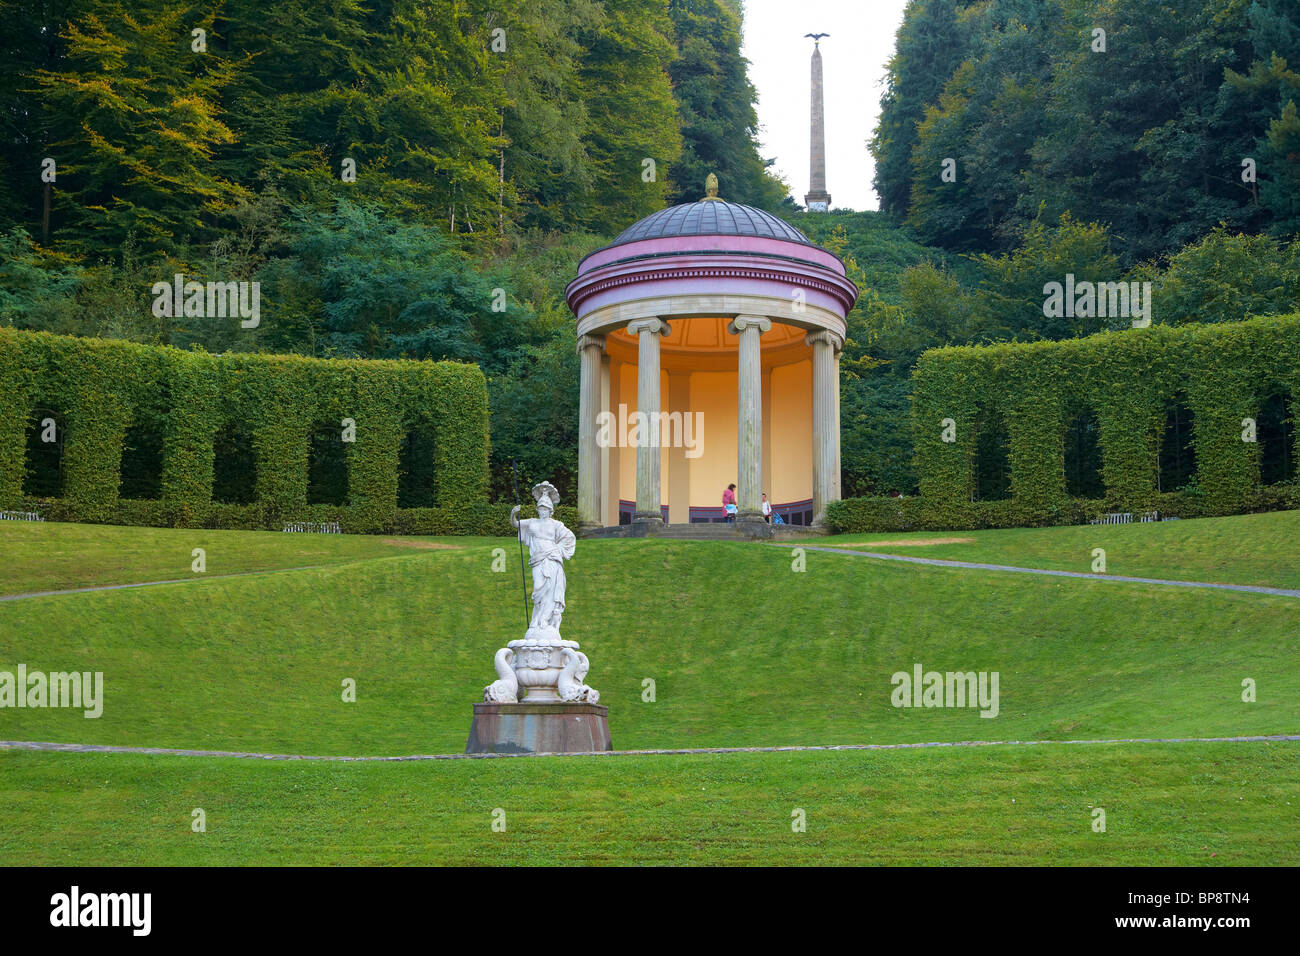 Park by Johann Moritz von Nassau-Siegen, Socalled amphitheatre, Temple of Ceres, Statue of goddess Athena, Evening, Late summer, Stock Photo